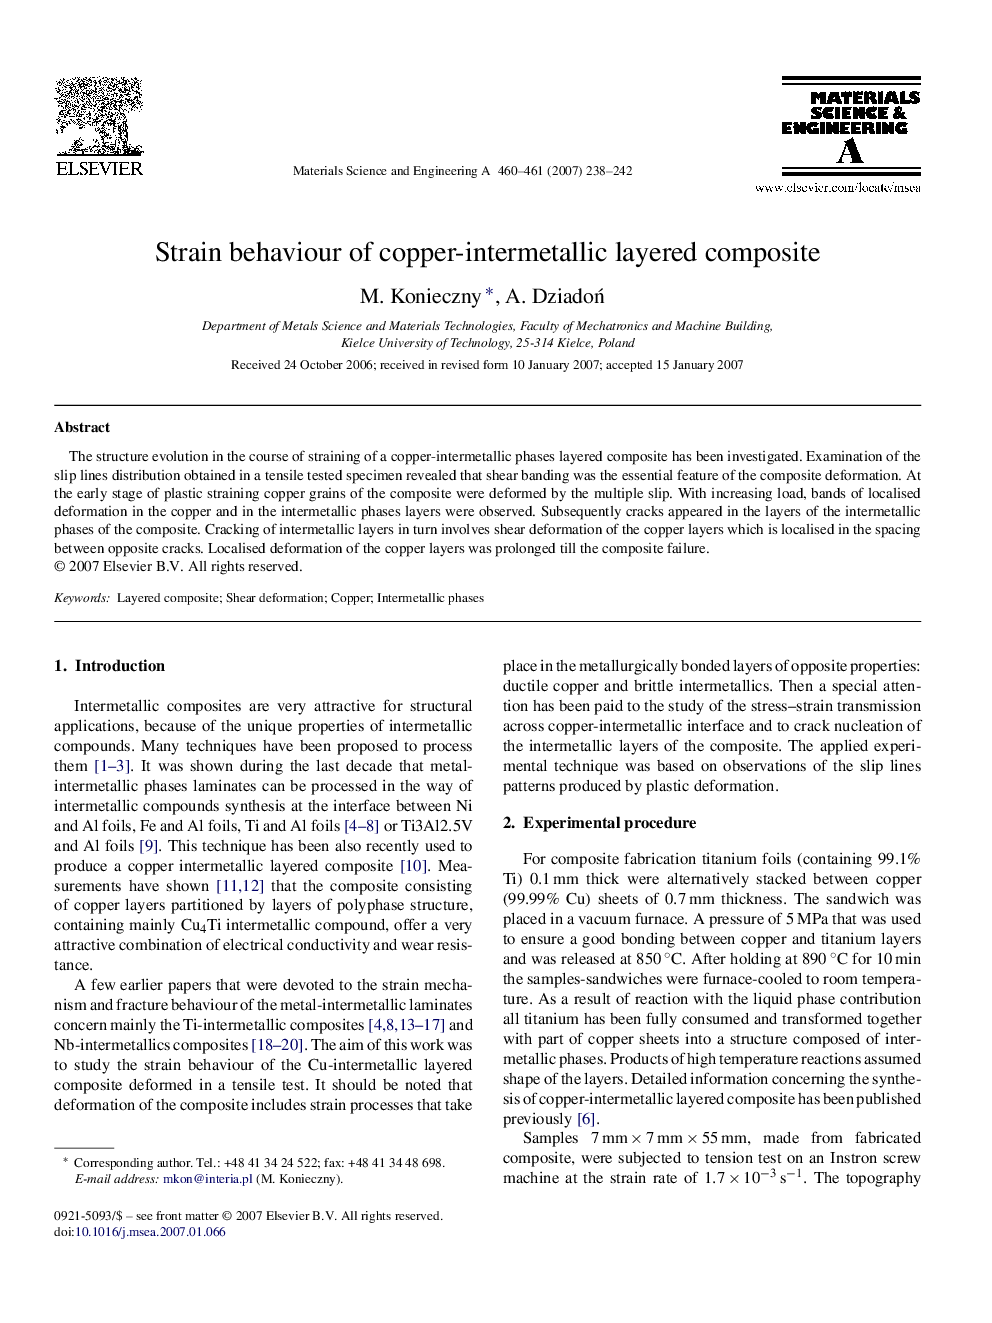 Strain behaviour of copper-intermetallic layered composite